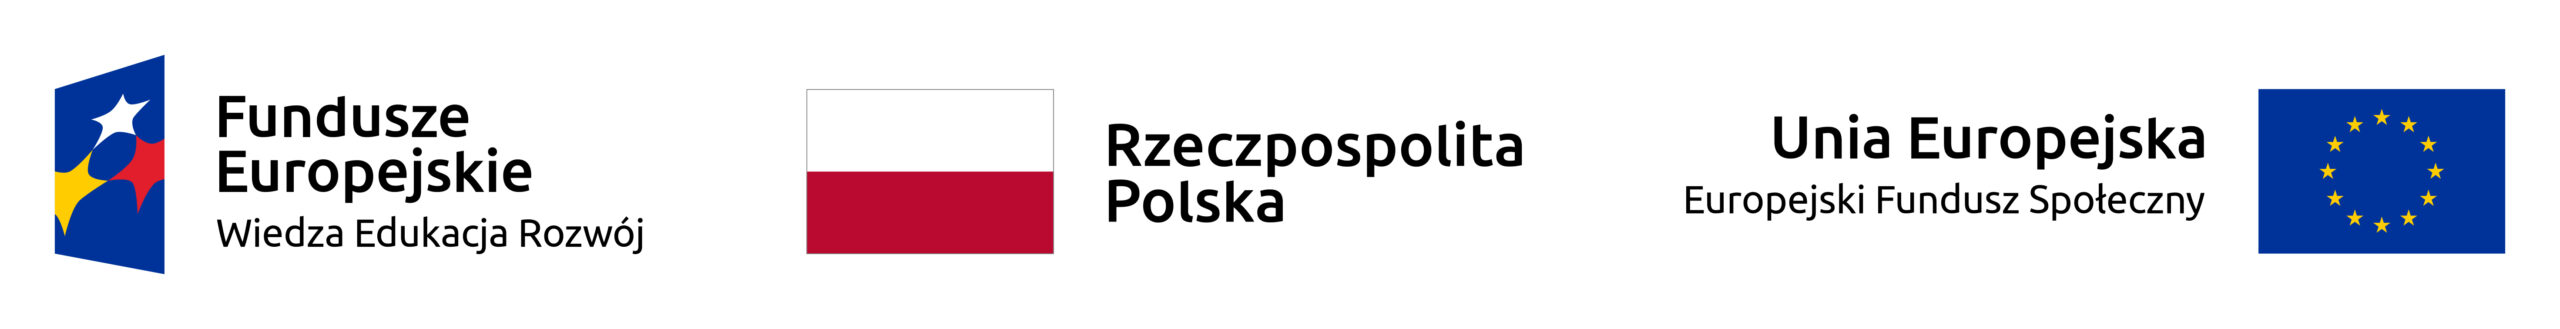 PZP_logotypy